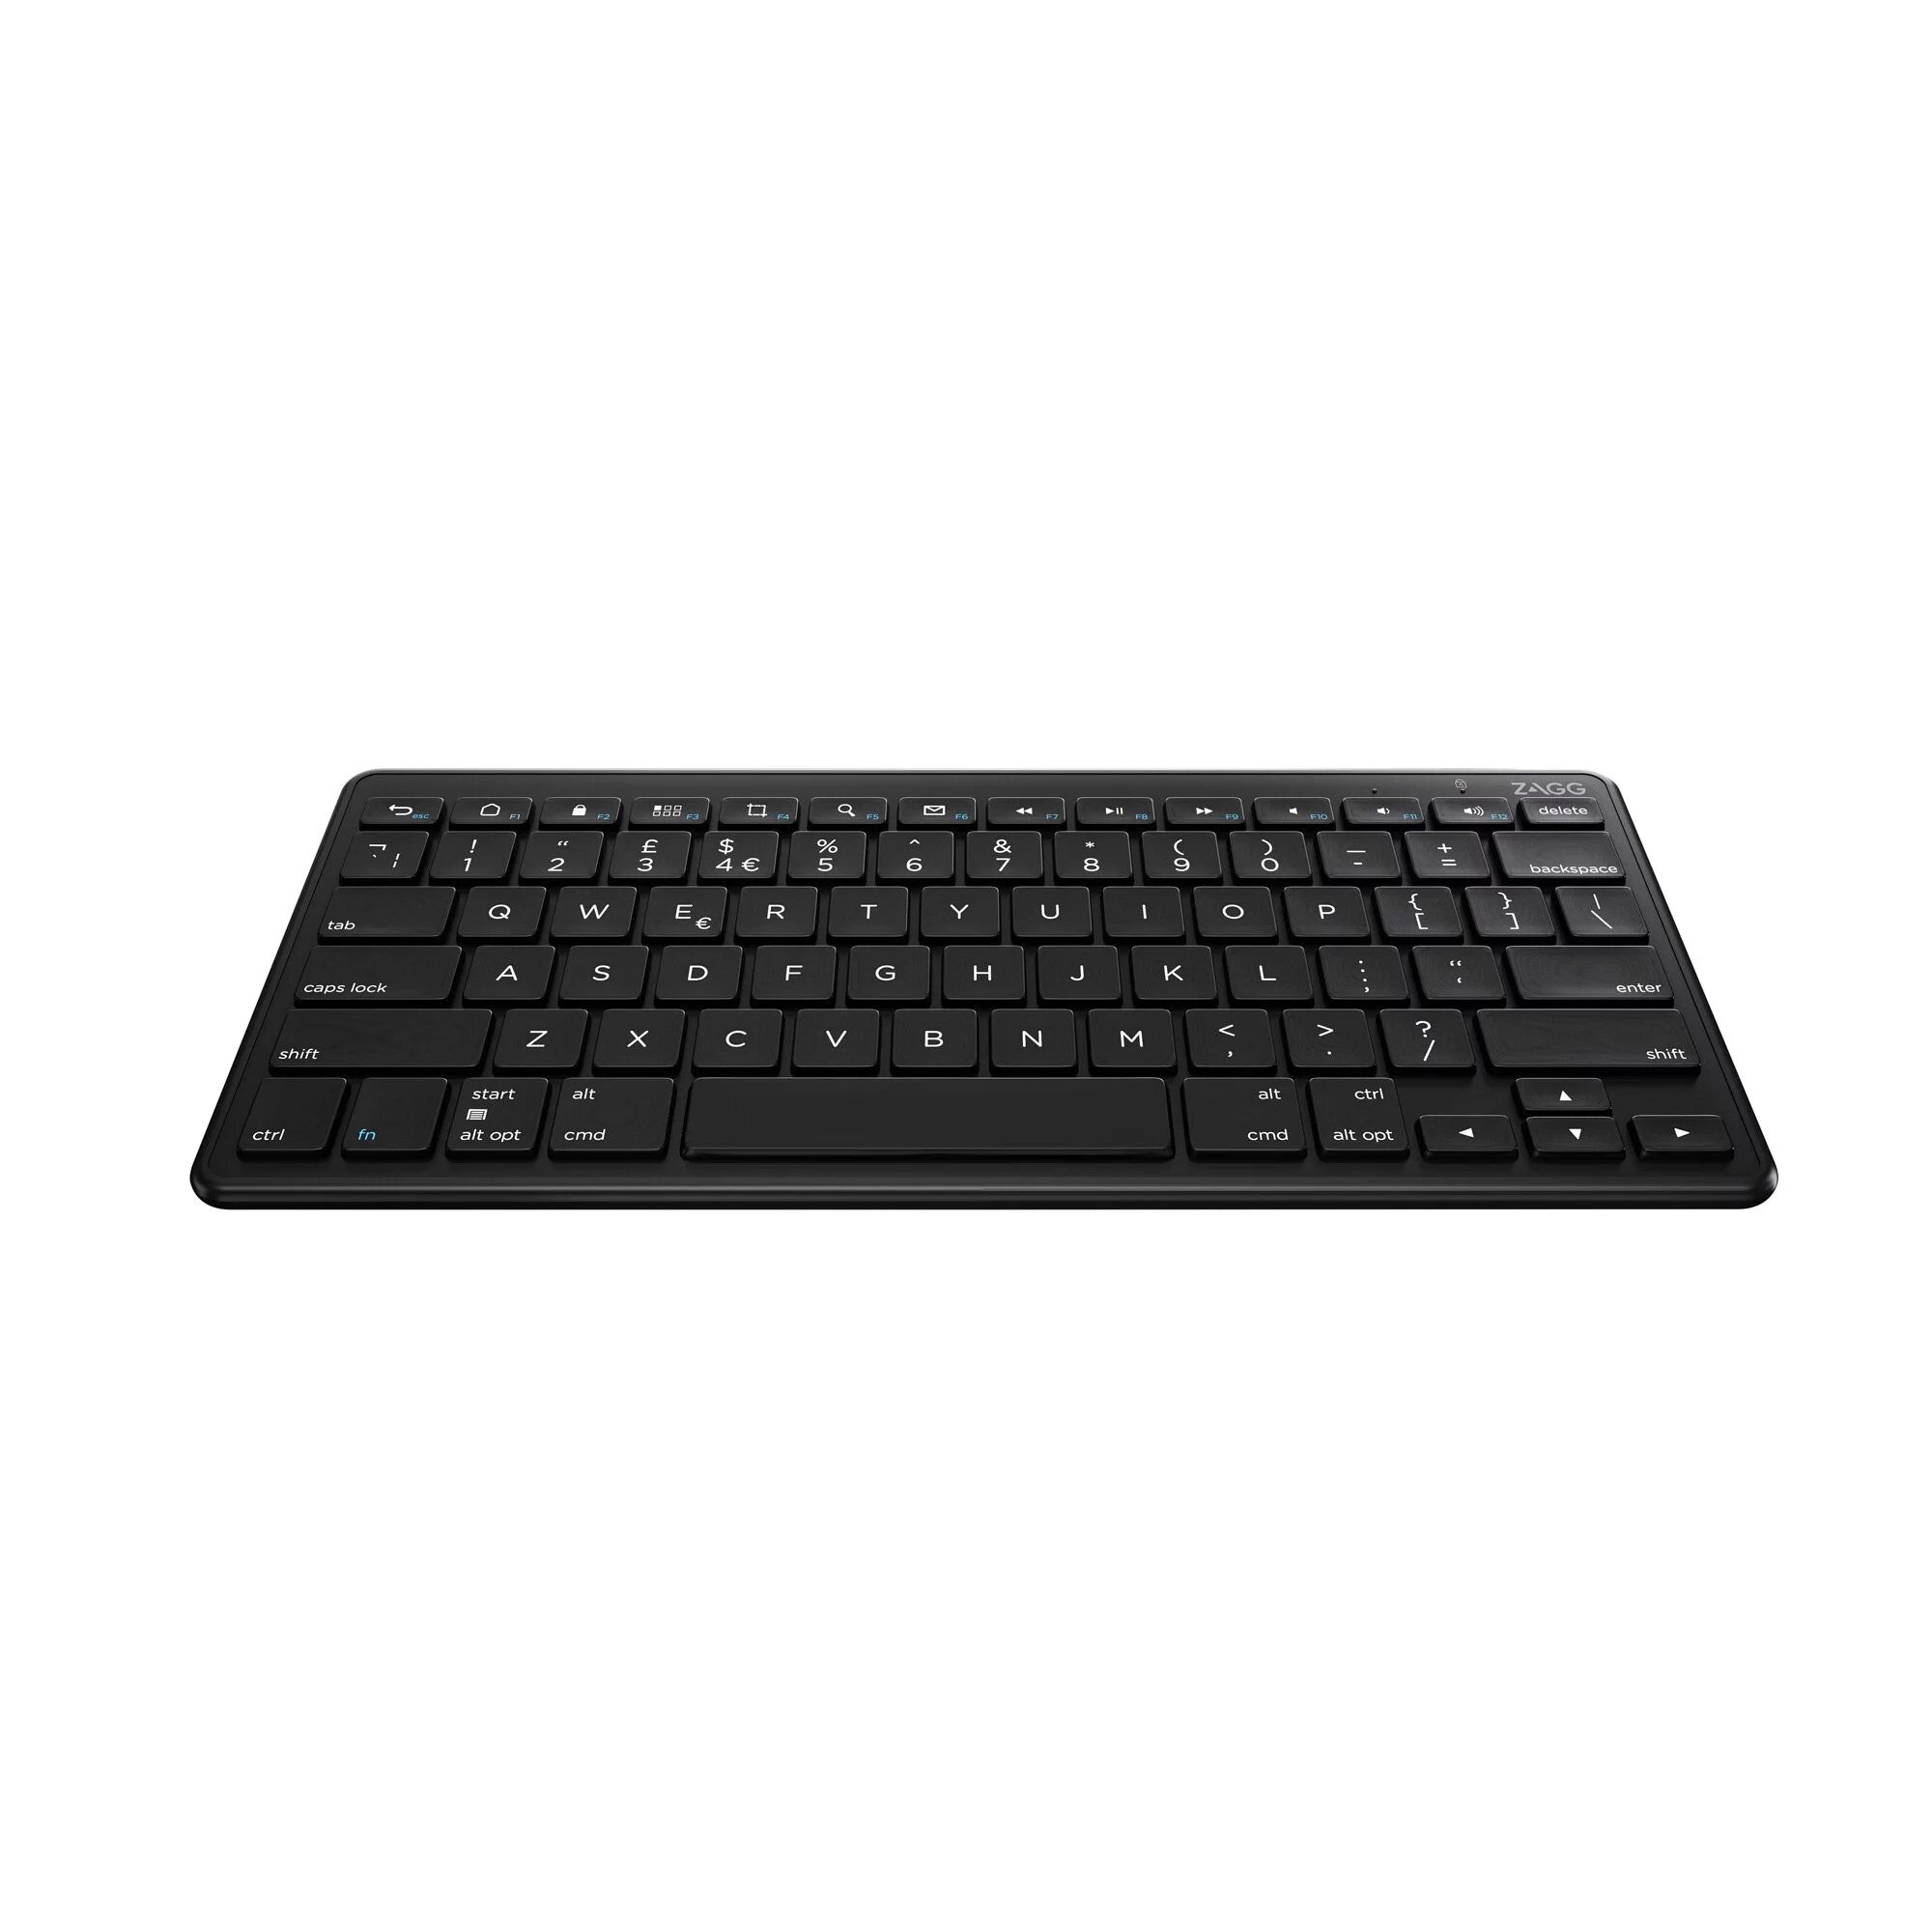 ZAGG Wireless Keyboard Full-Size 藍牙無線鍵盤